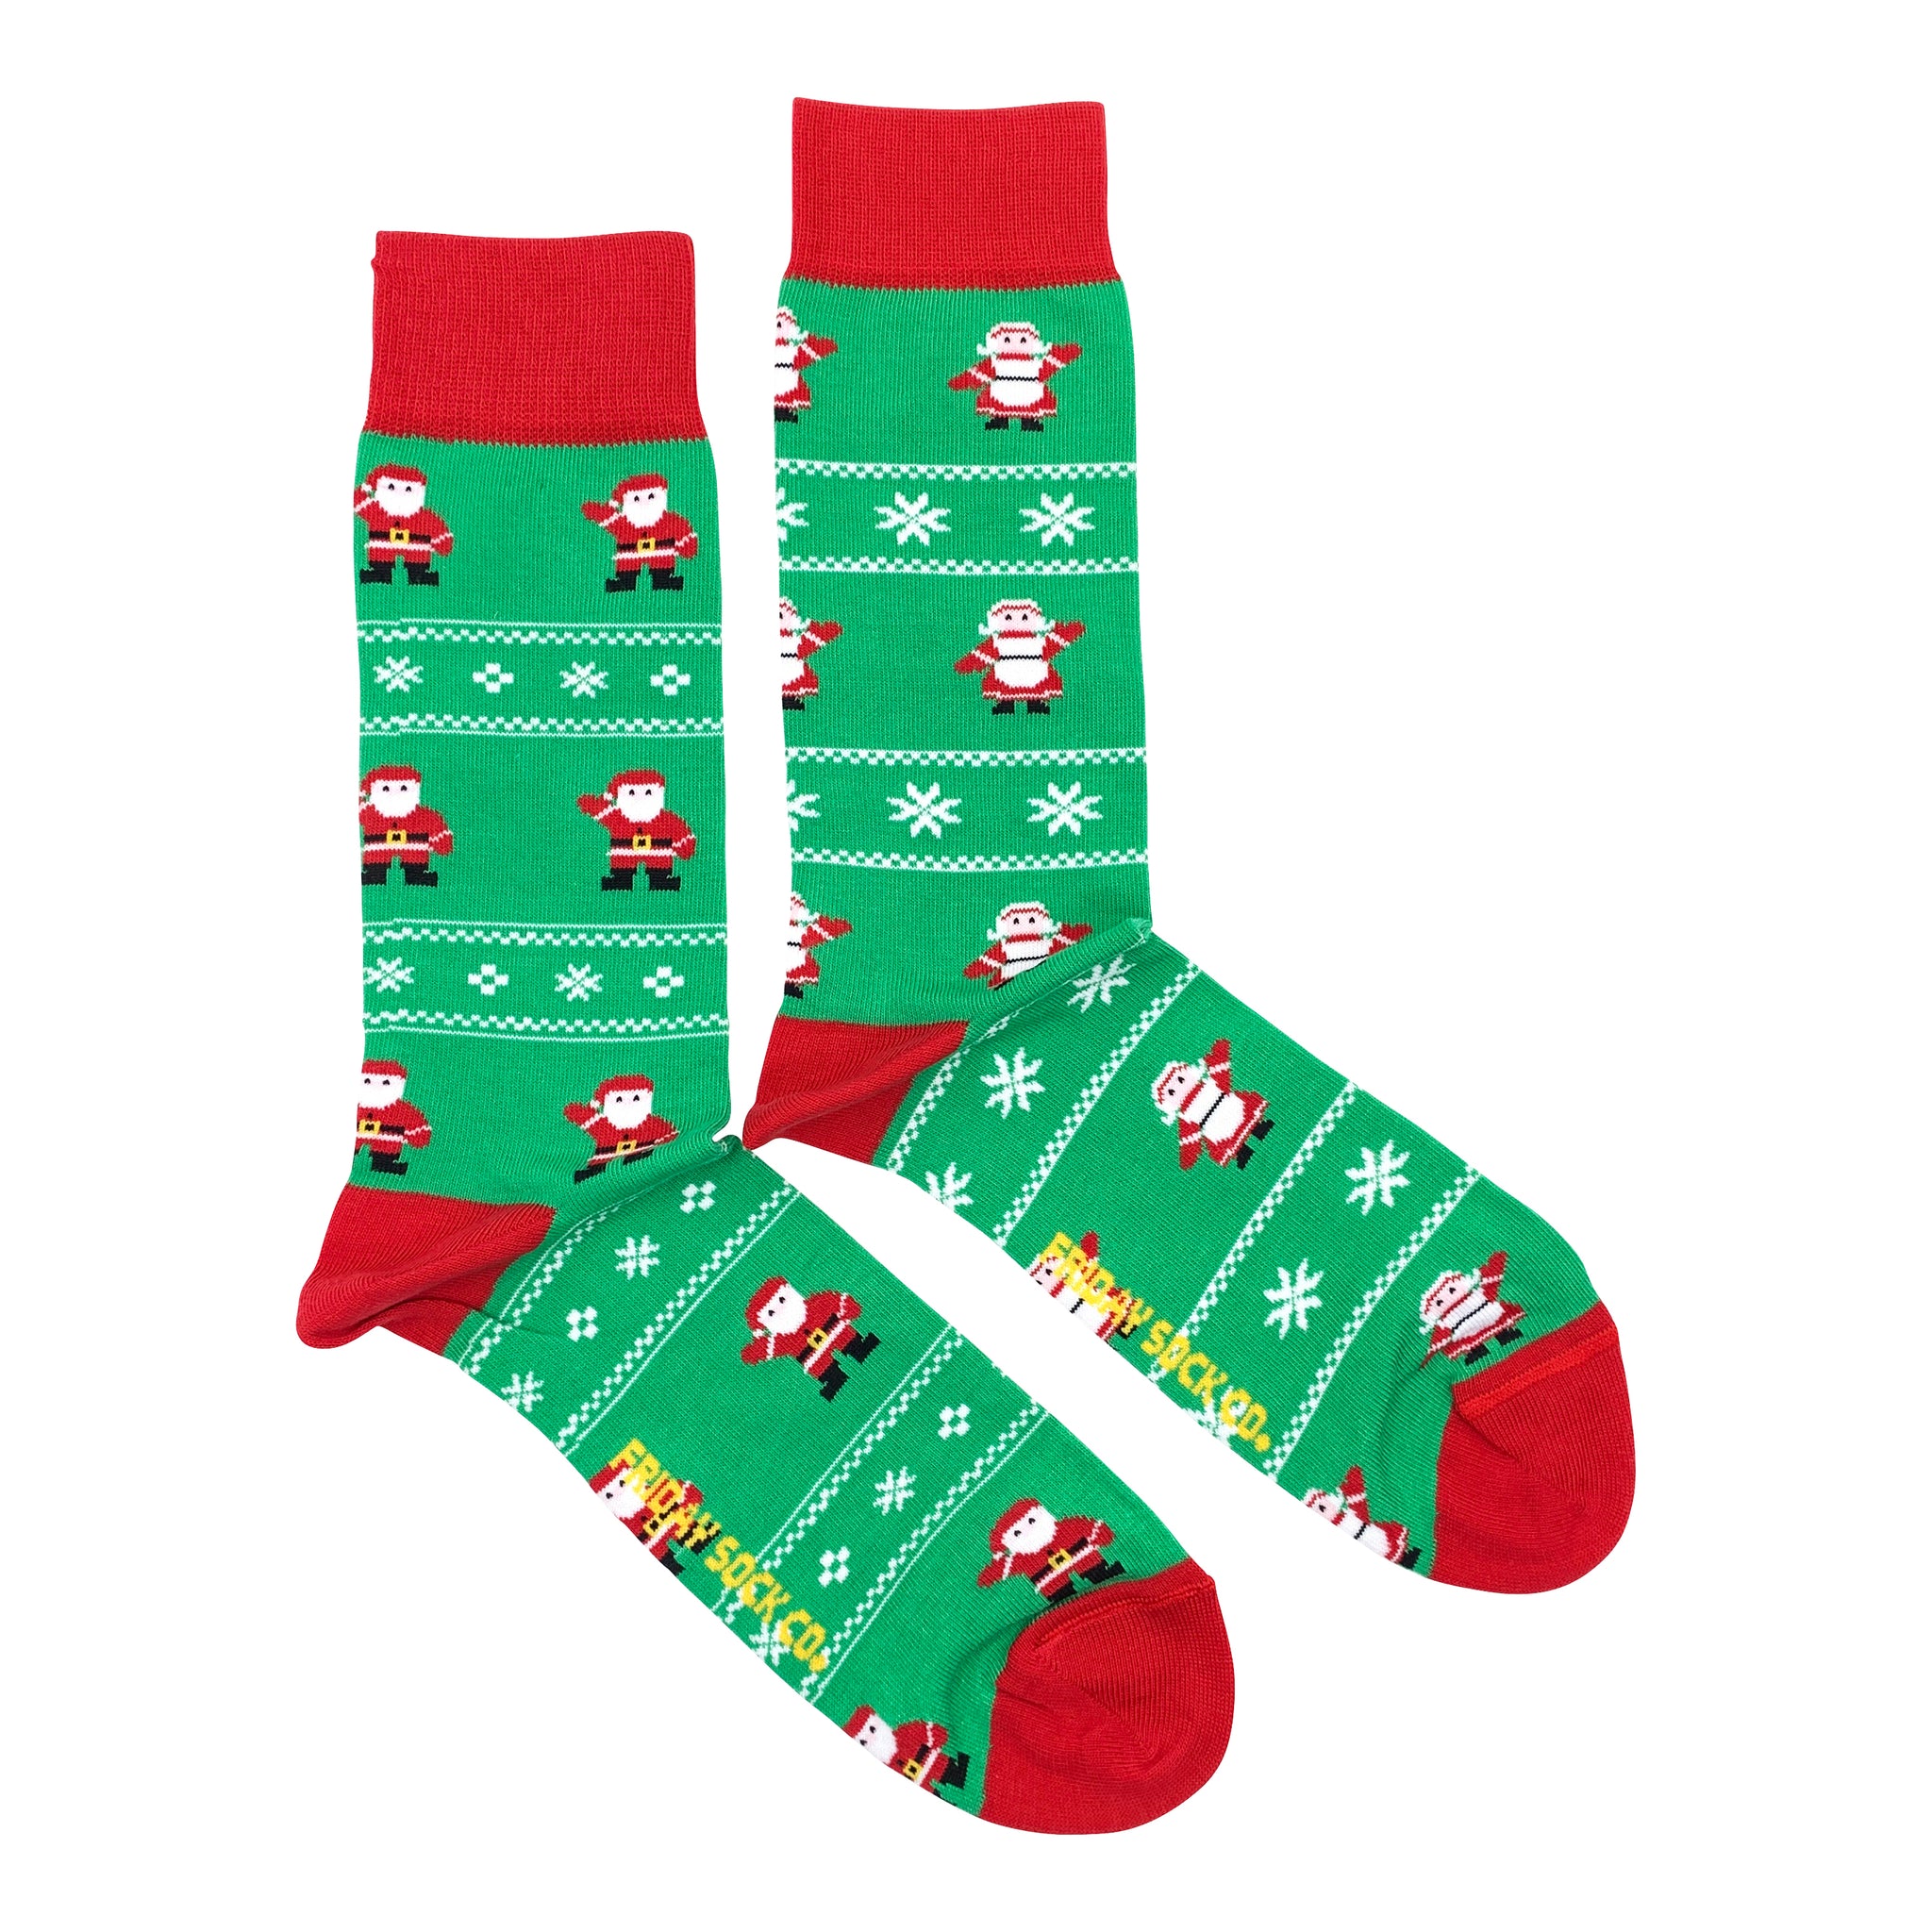 Ugly Christmas Mr and Mrs Claus Mid-Calf Socks